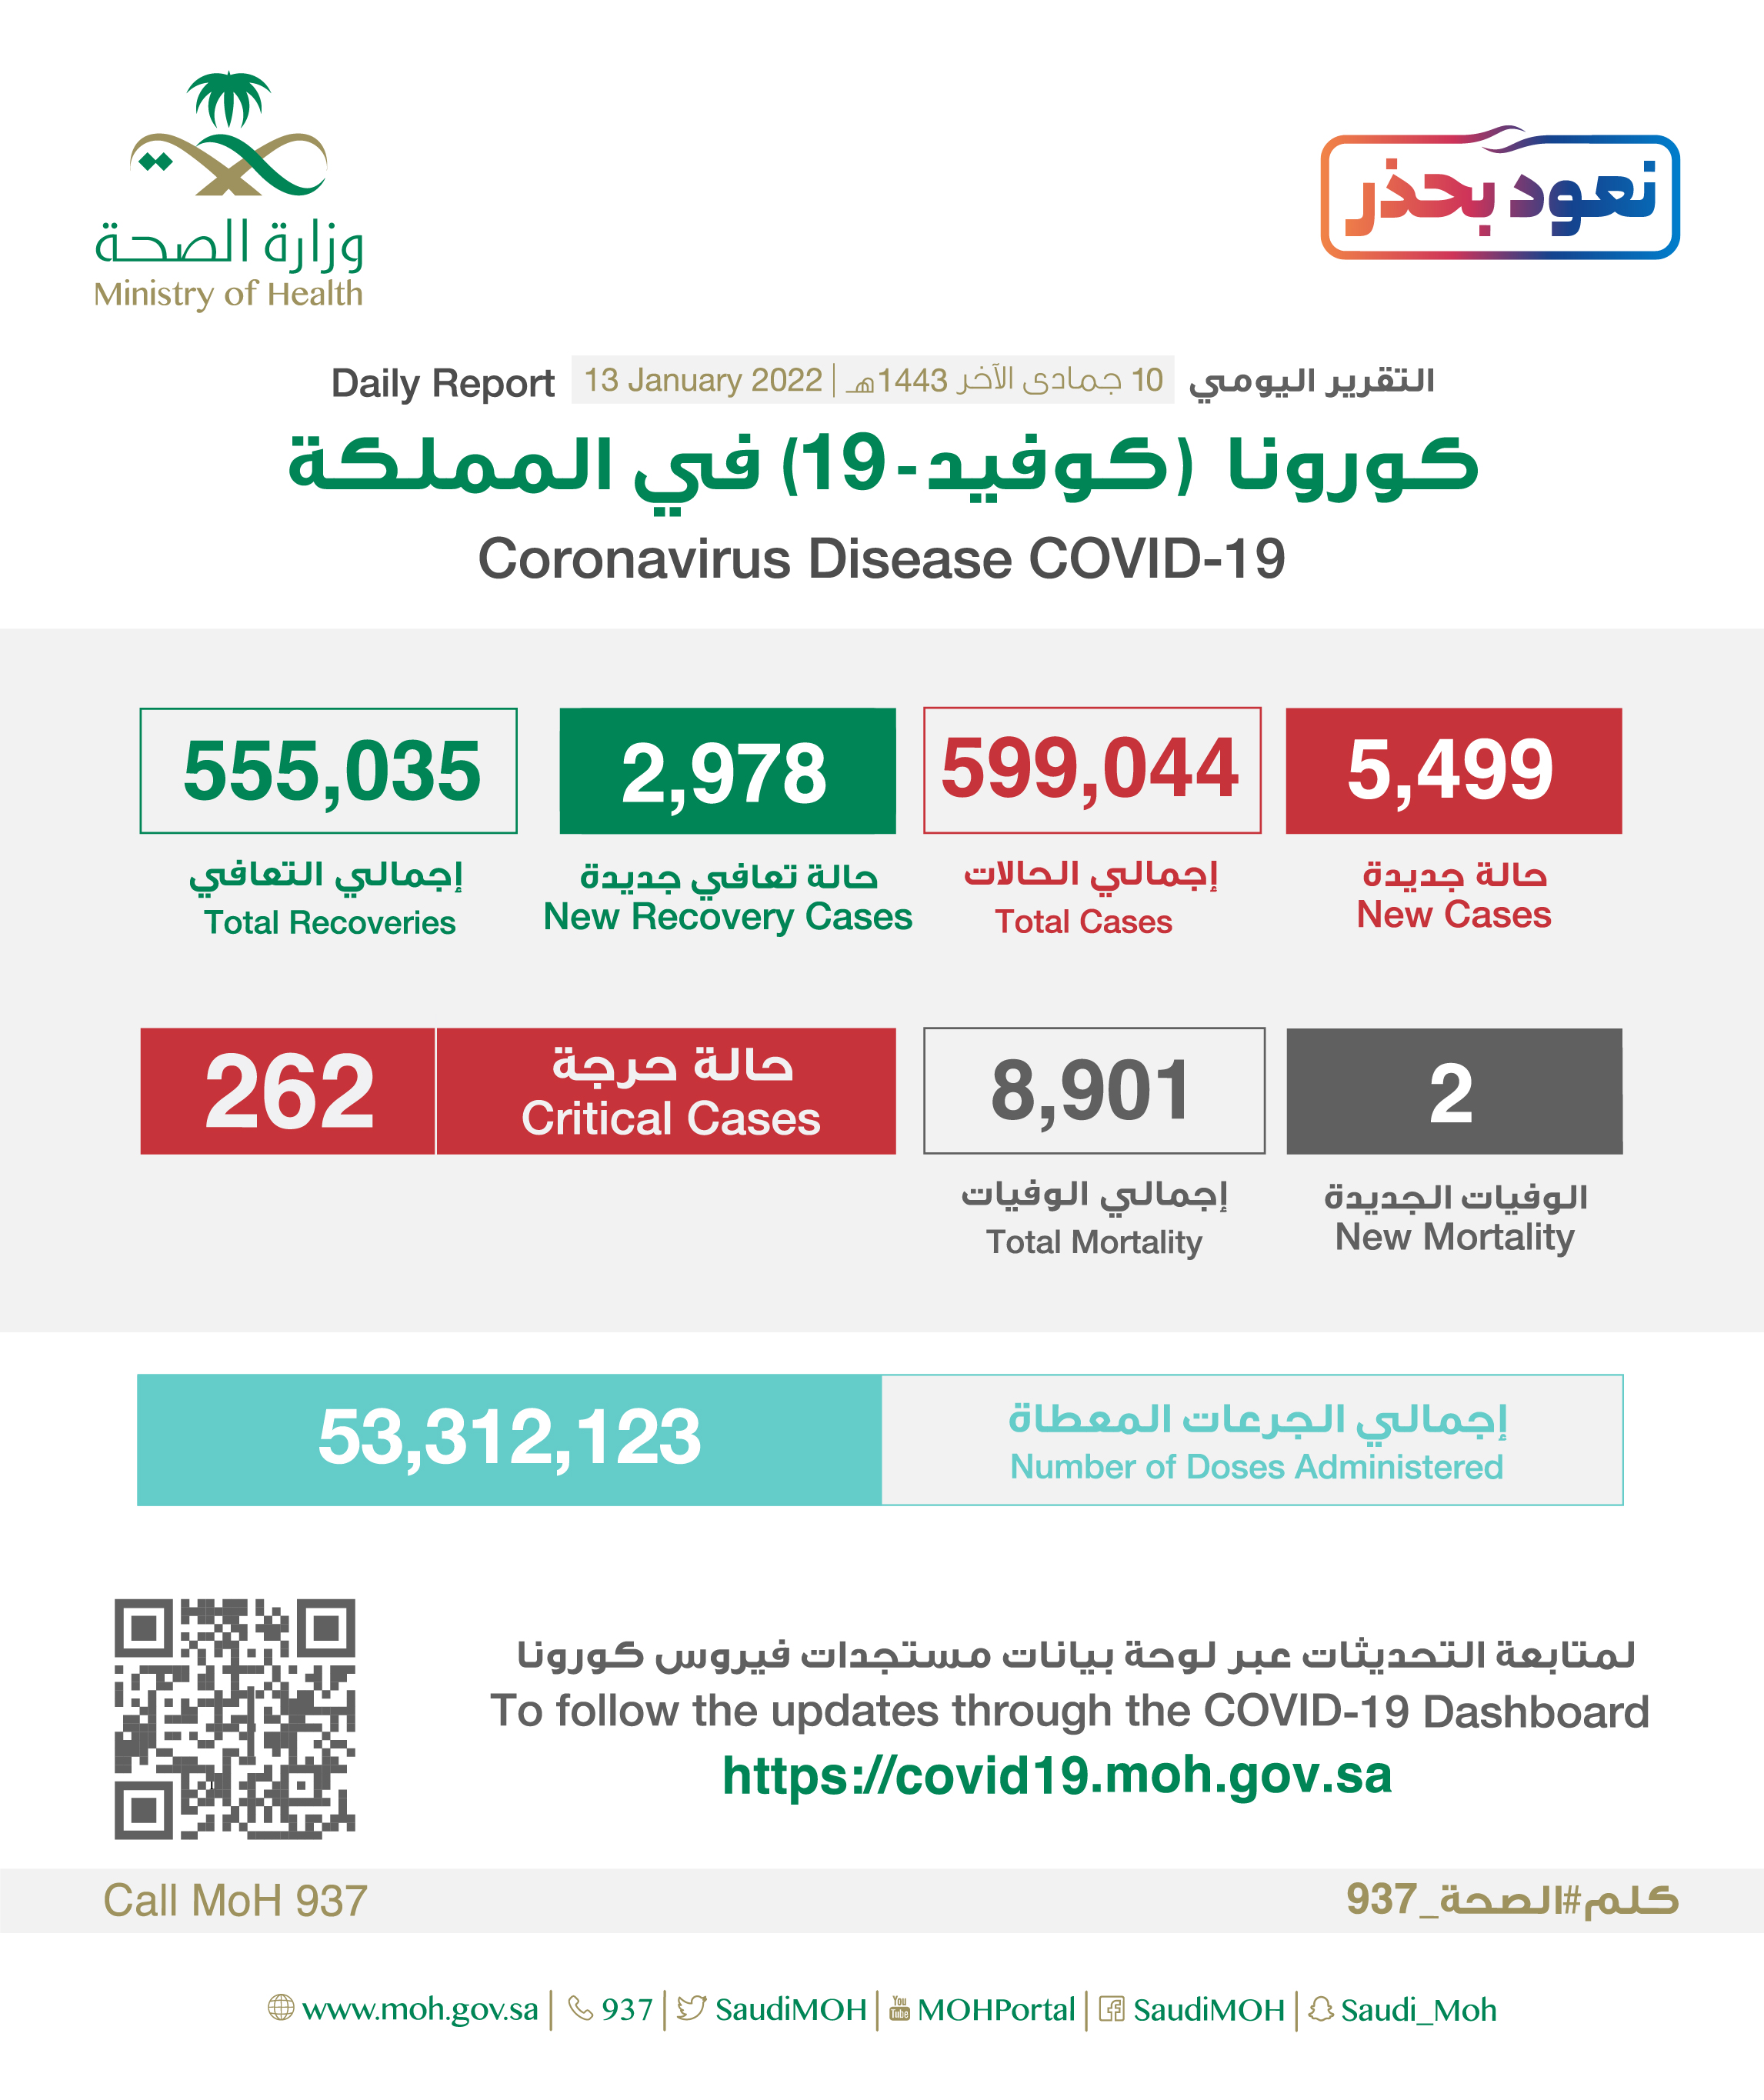 Saudi Arabia Coronavirus : Total Cases : 599,044, New Cases : 5,499, Cured : 552,035, Deaths: 8,901, Active Cases : 35,108